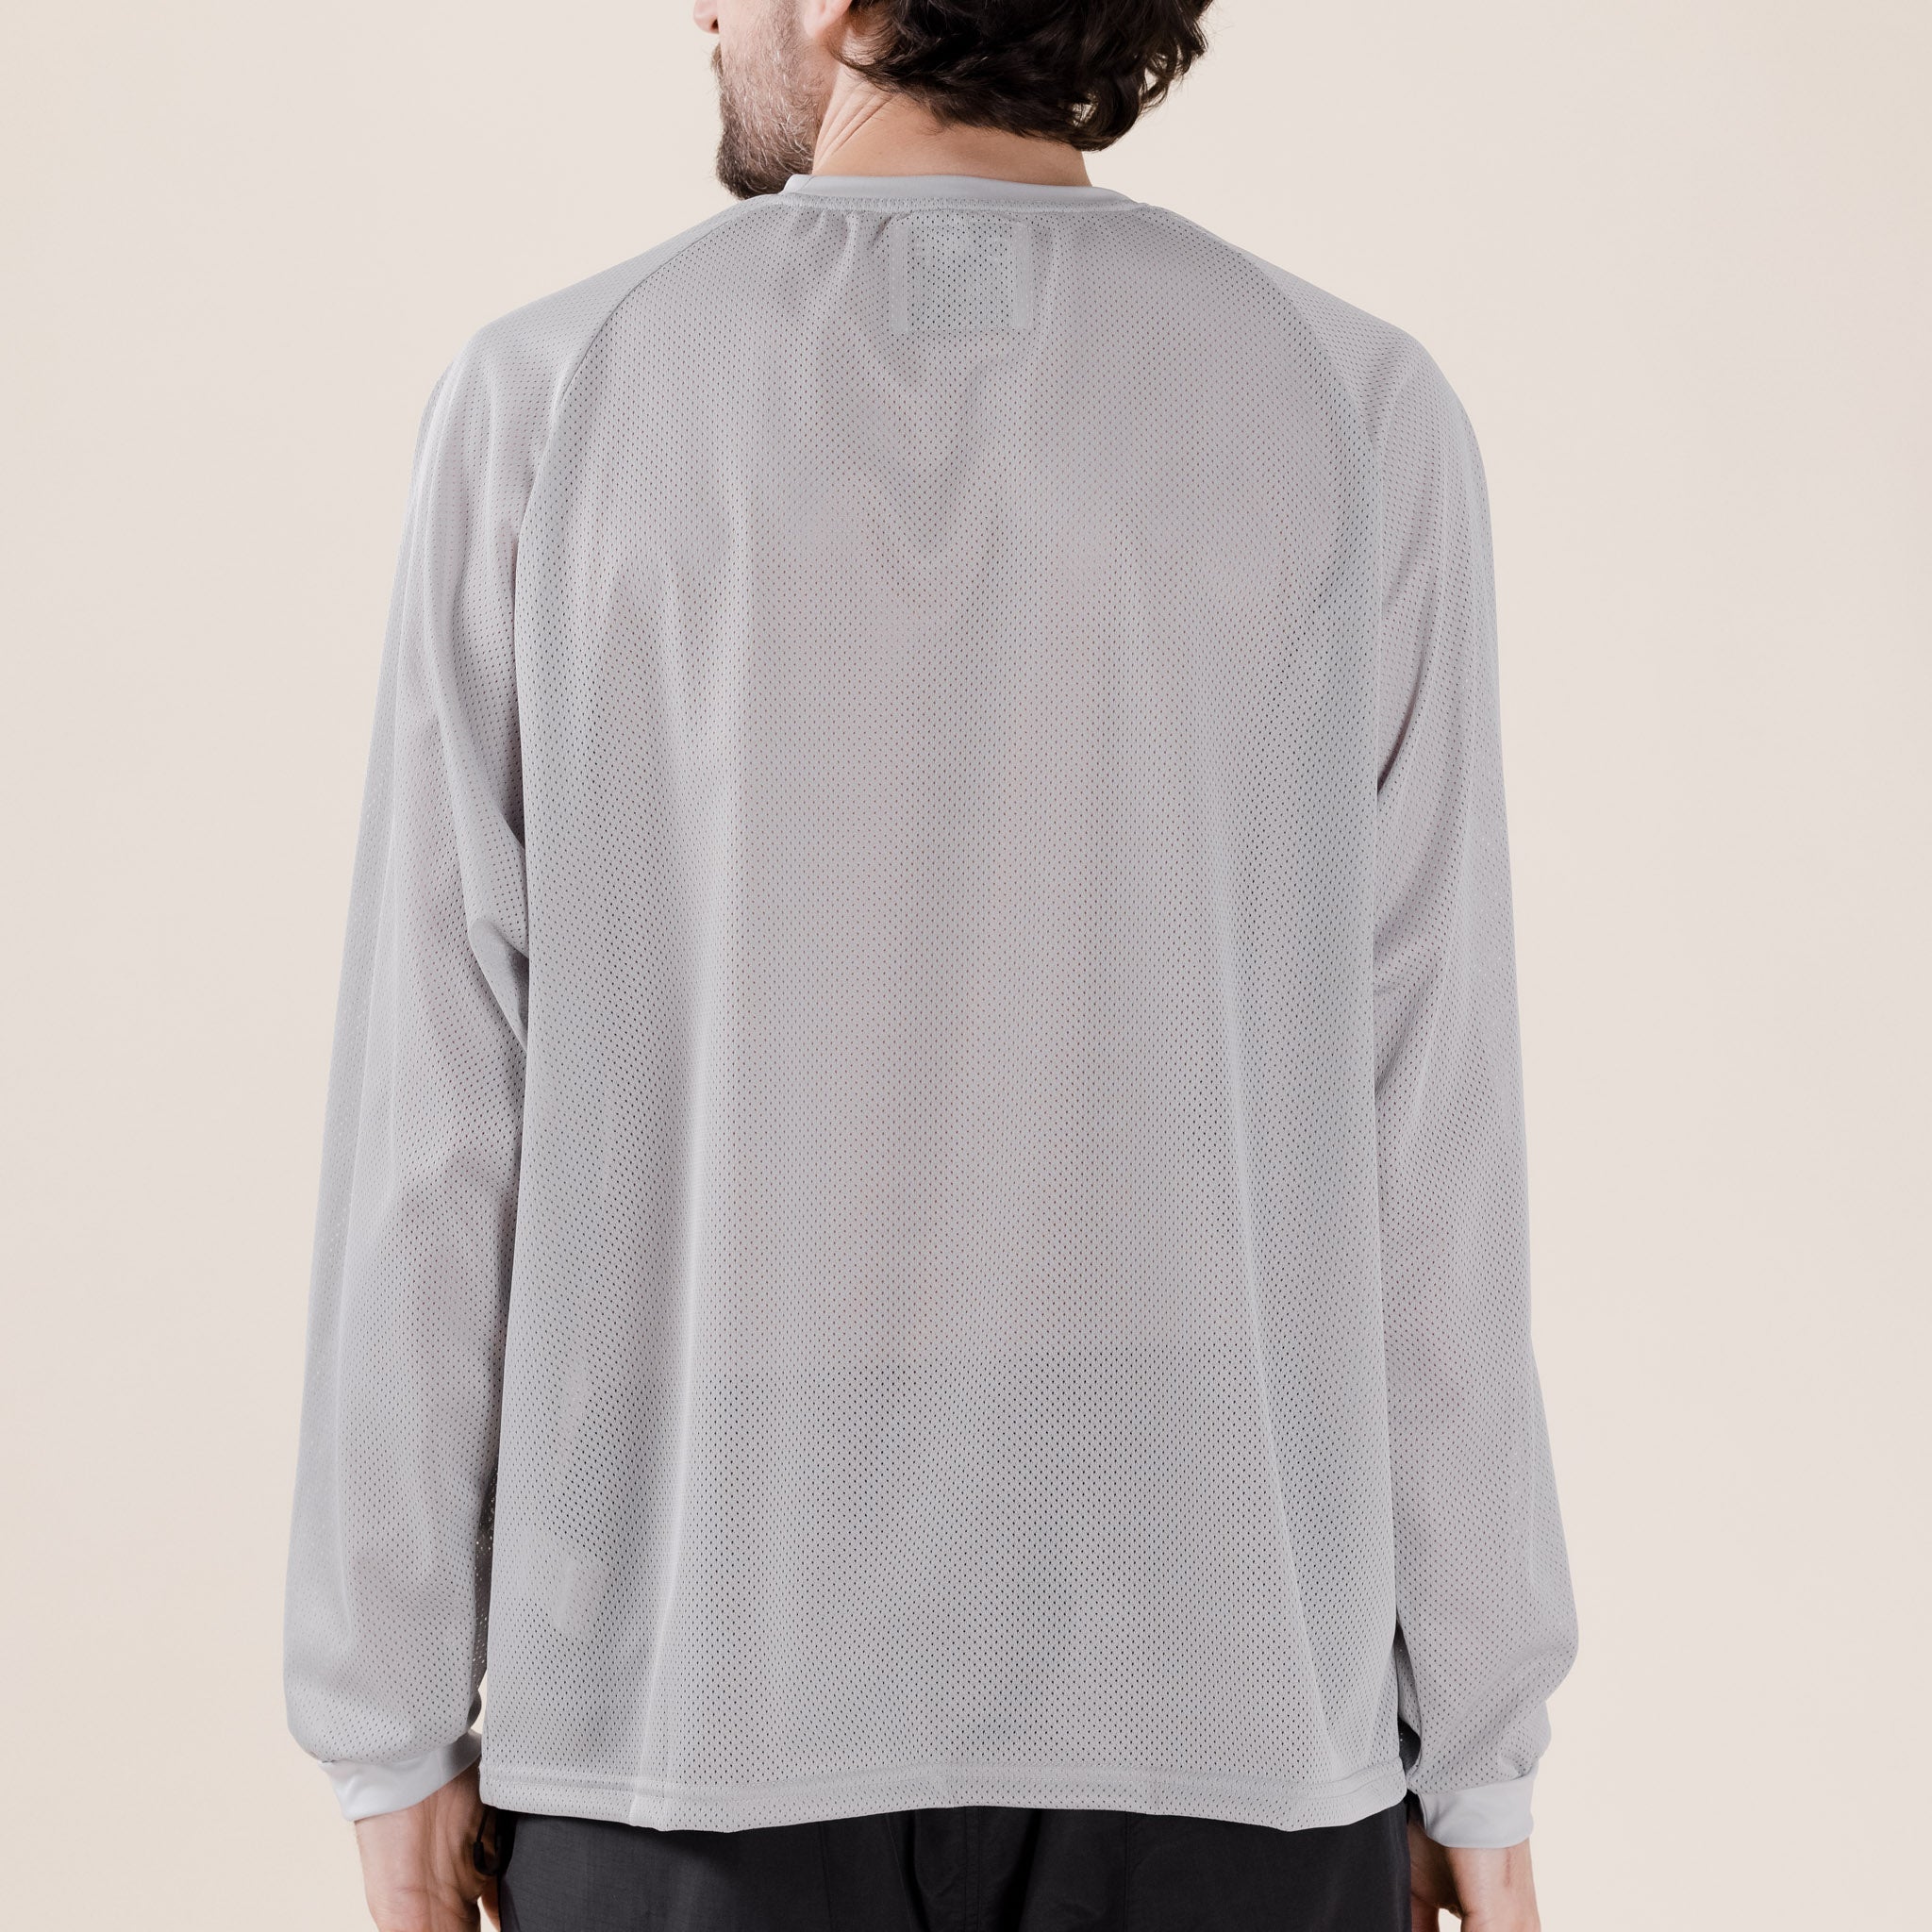 CMF Comfy Outdoor Garment - Quick Dry Mesh Long Sleeve T-Shirt - Light Grey UK Stockist Best Price